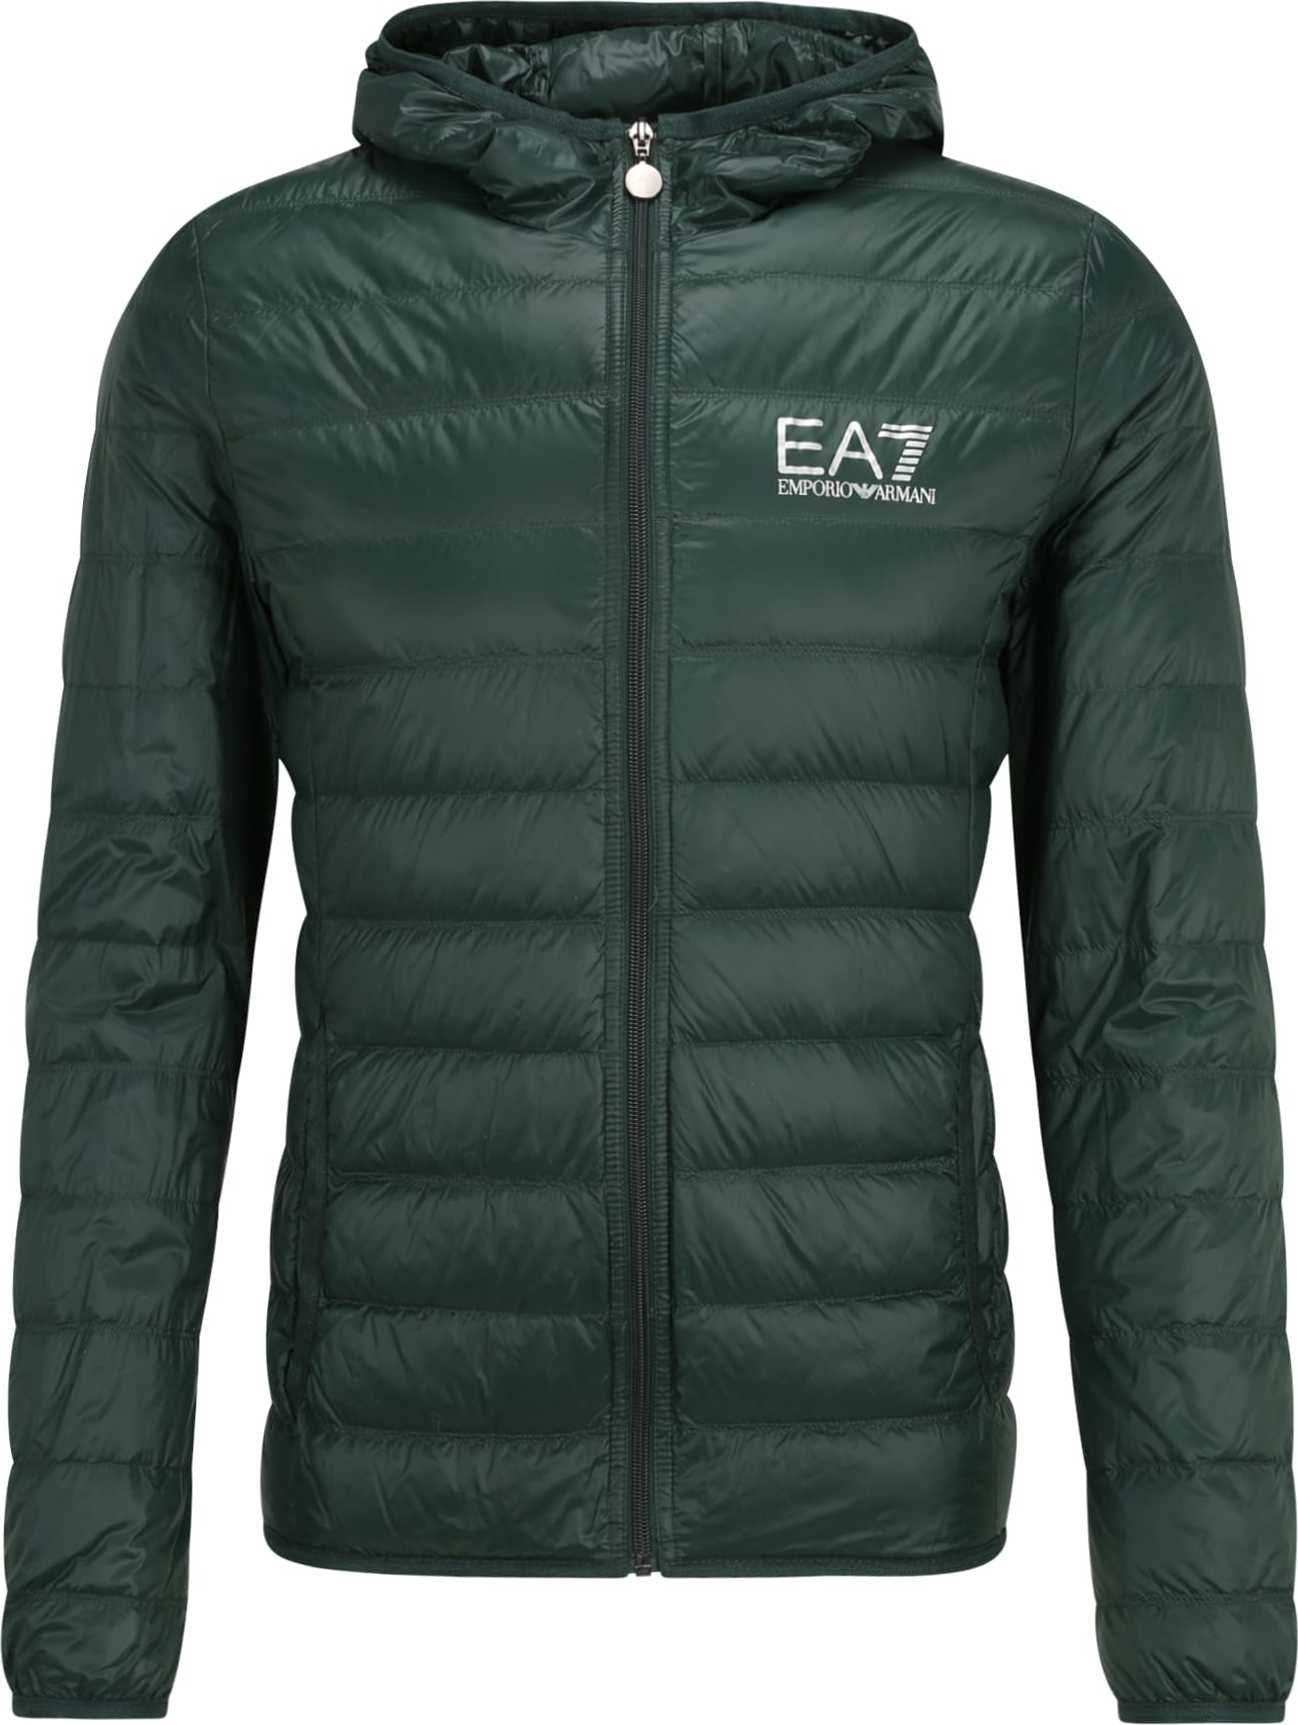 EA7 Emporio Armani Zimní bunda tmavě zelená / offwhite